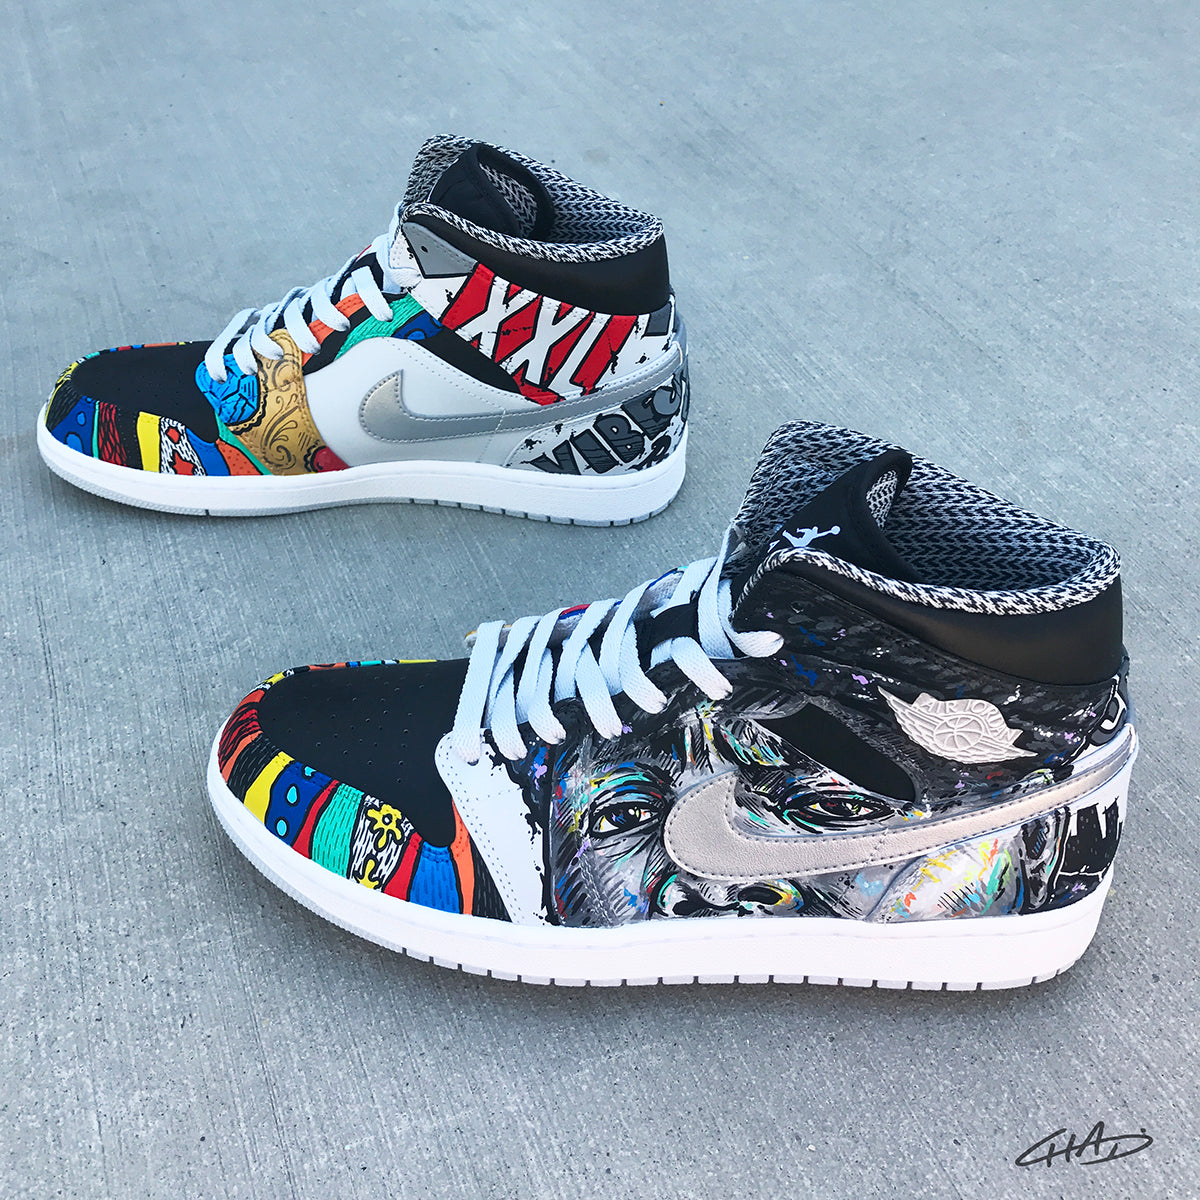 Notorious - Custom Hand Painted Jordan Retro 1 Shoes